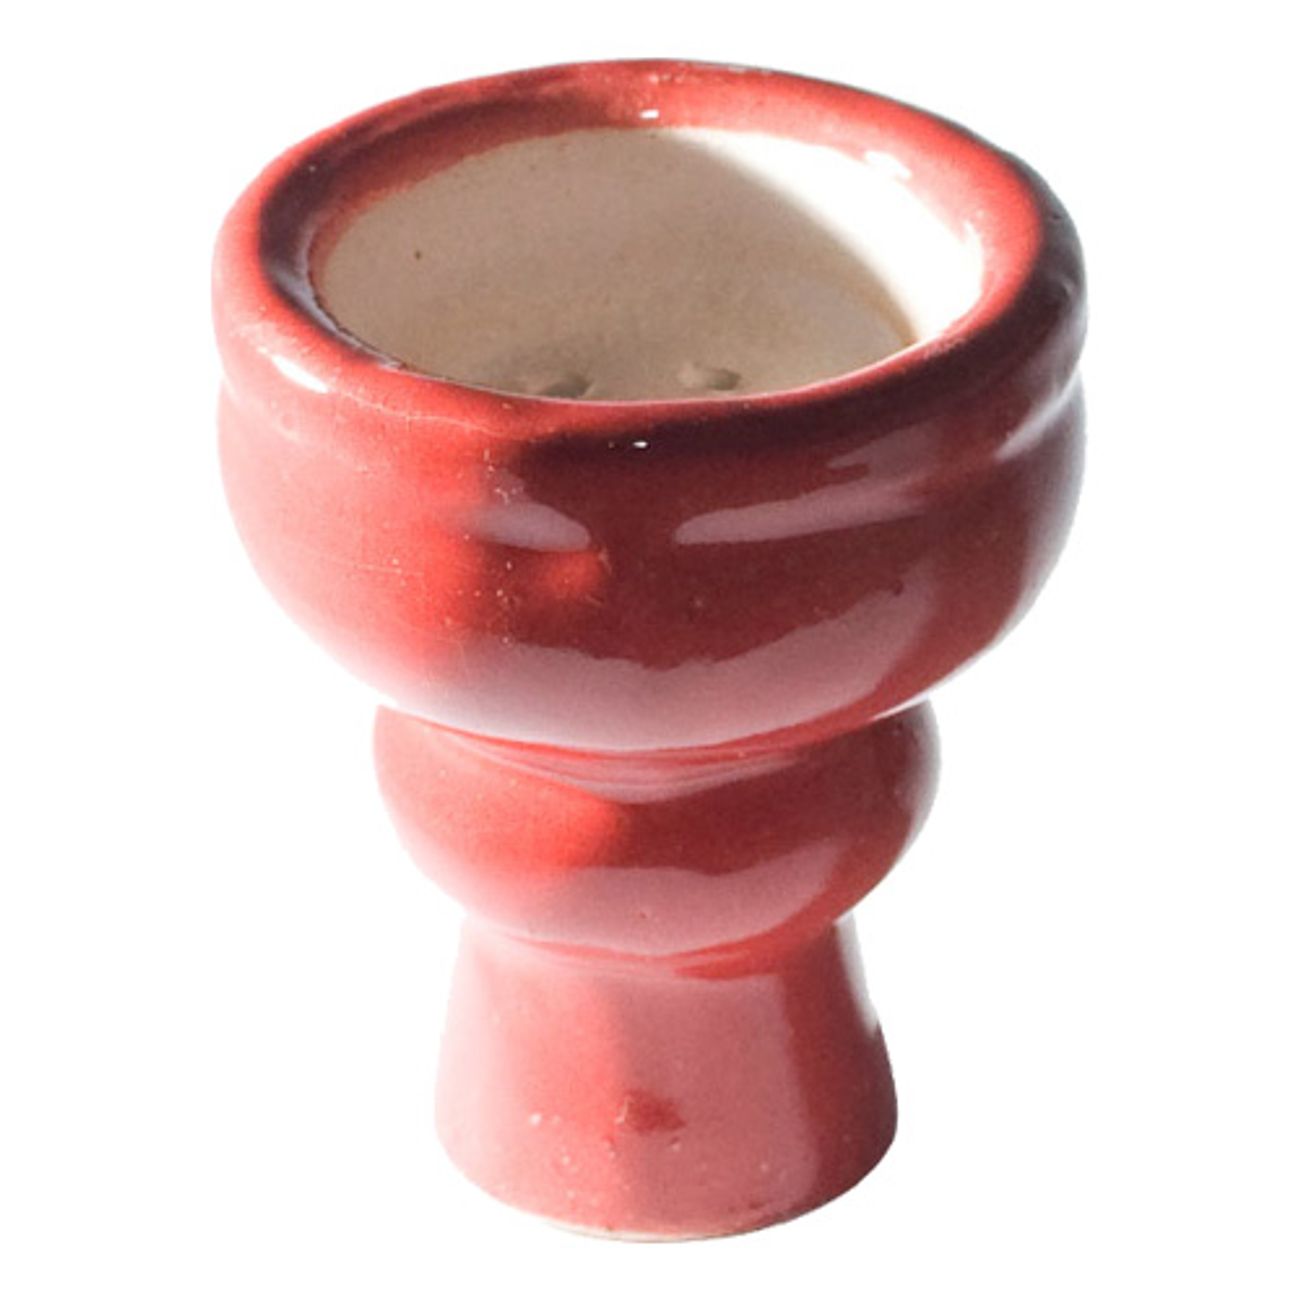 keramikhuvud-aladin-2